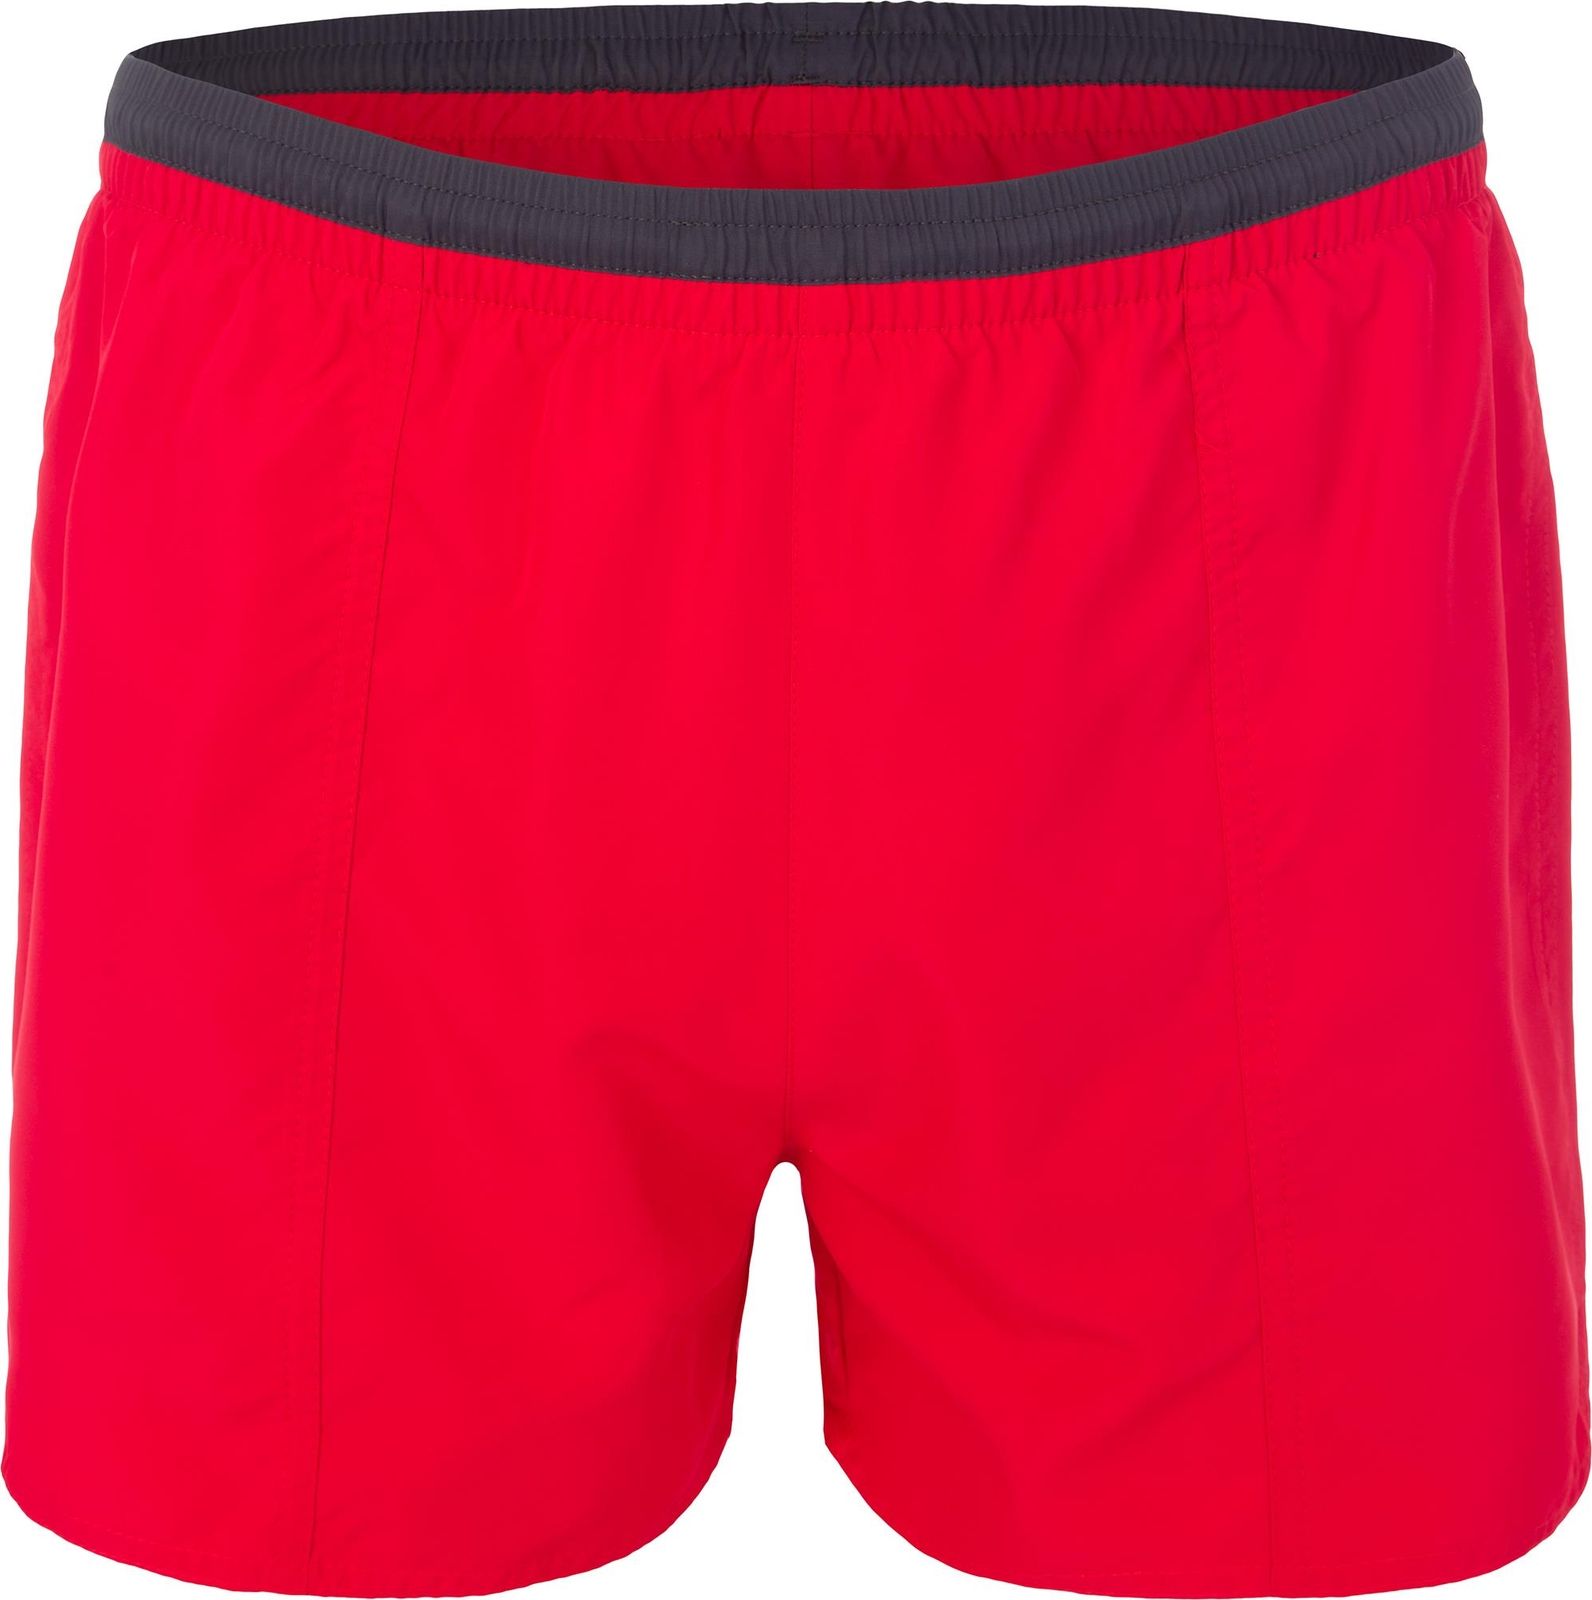     Joss Men's shorts, : . MSW40S6-R2.  46